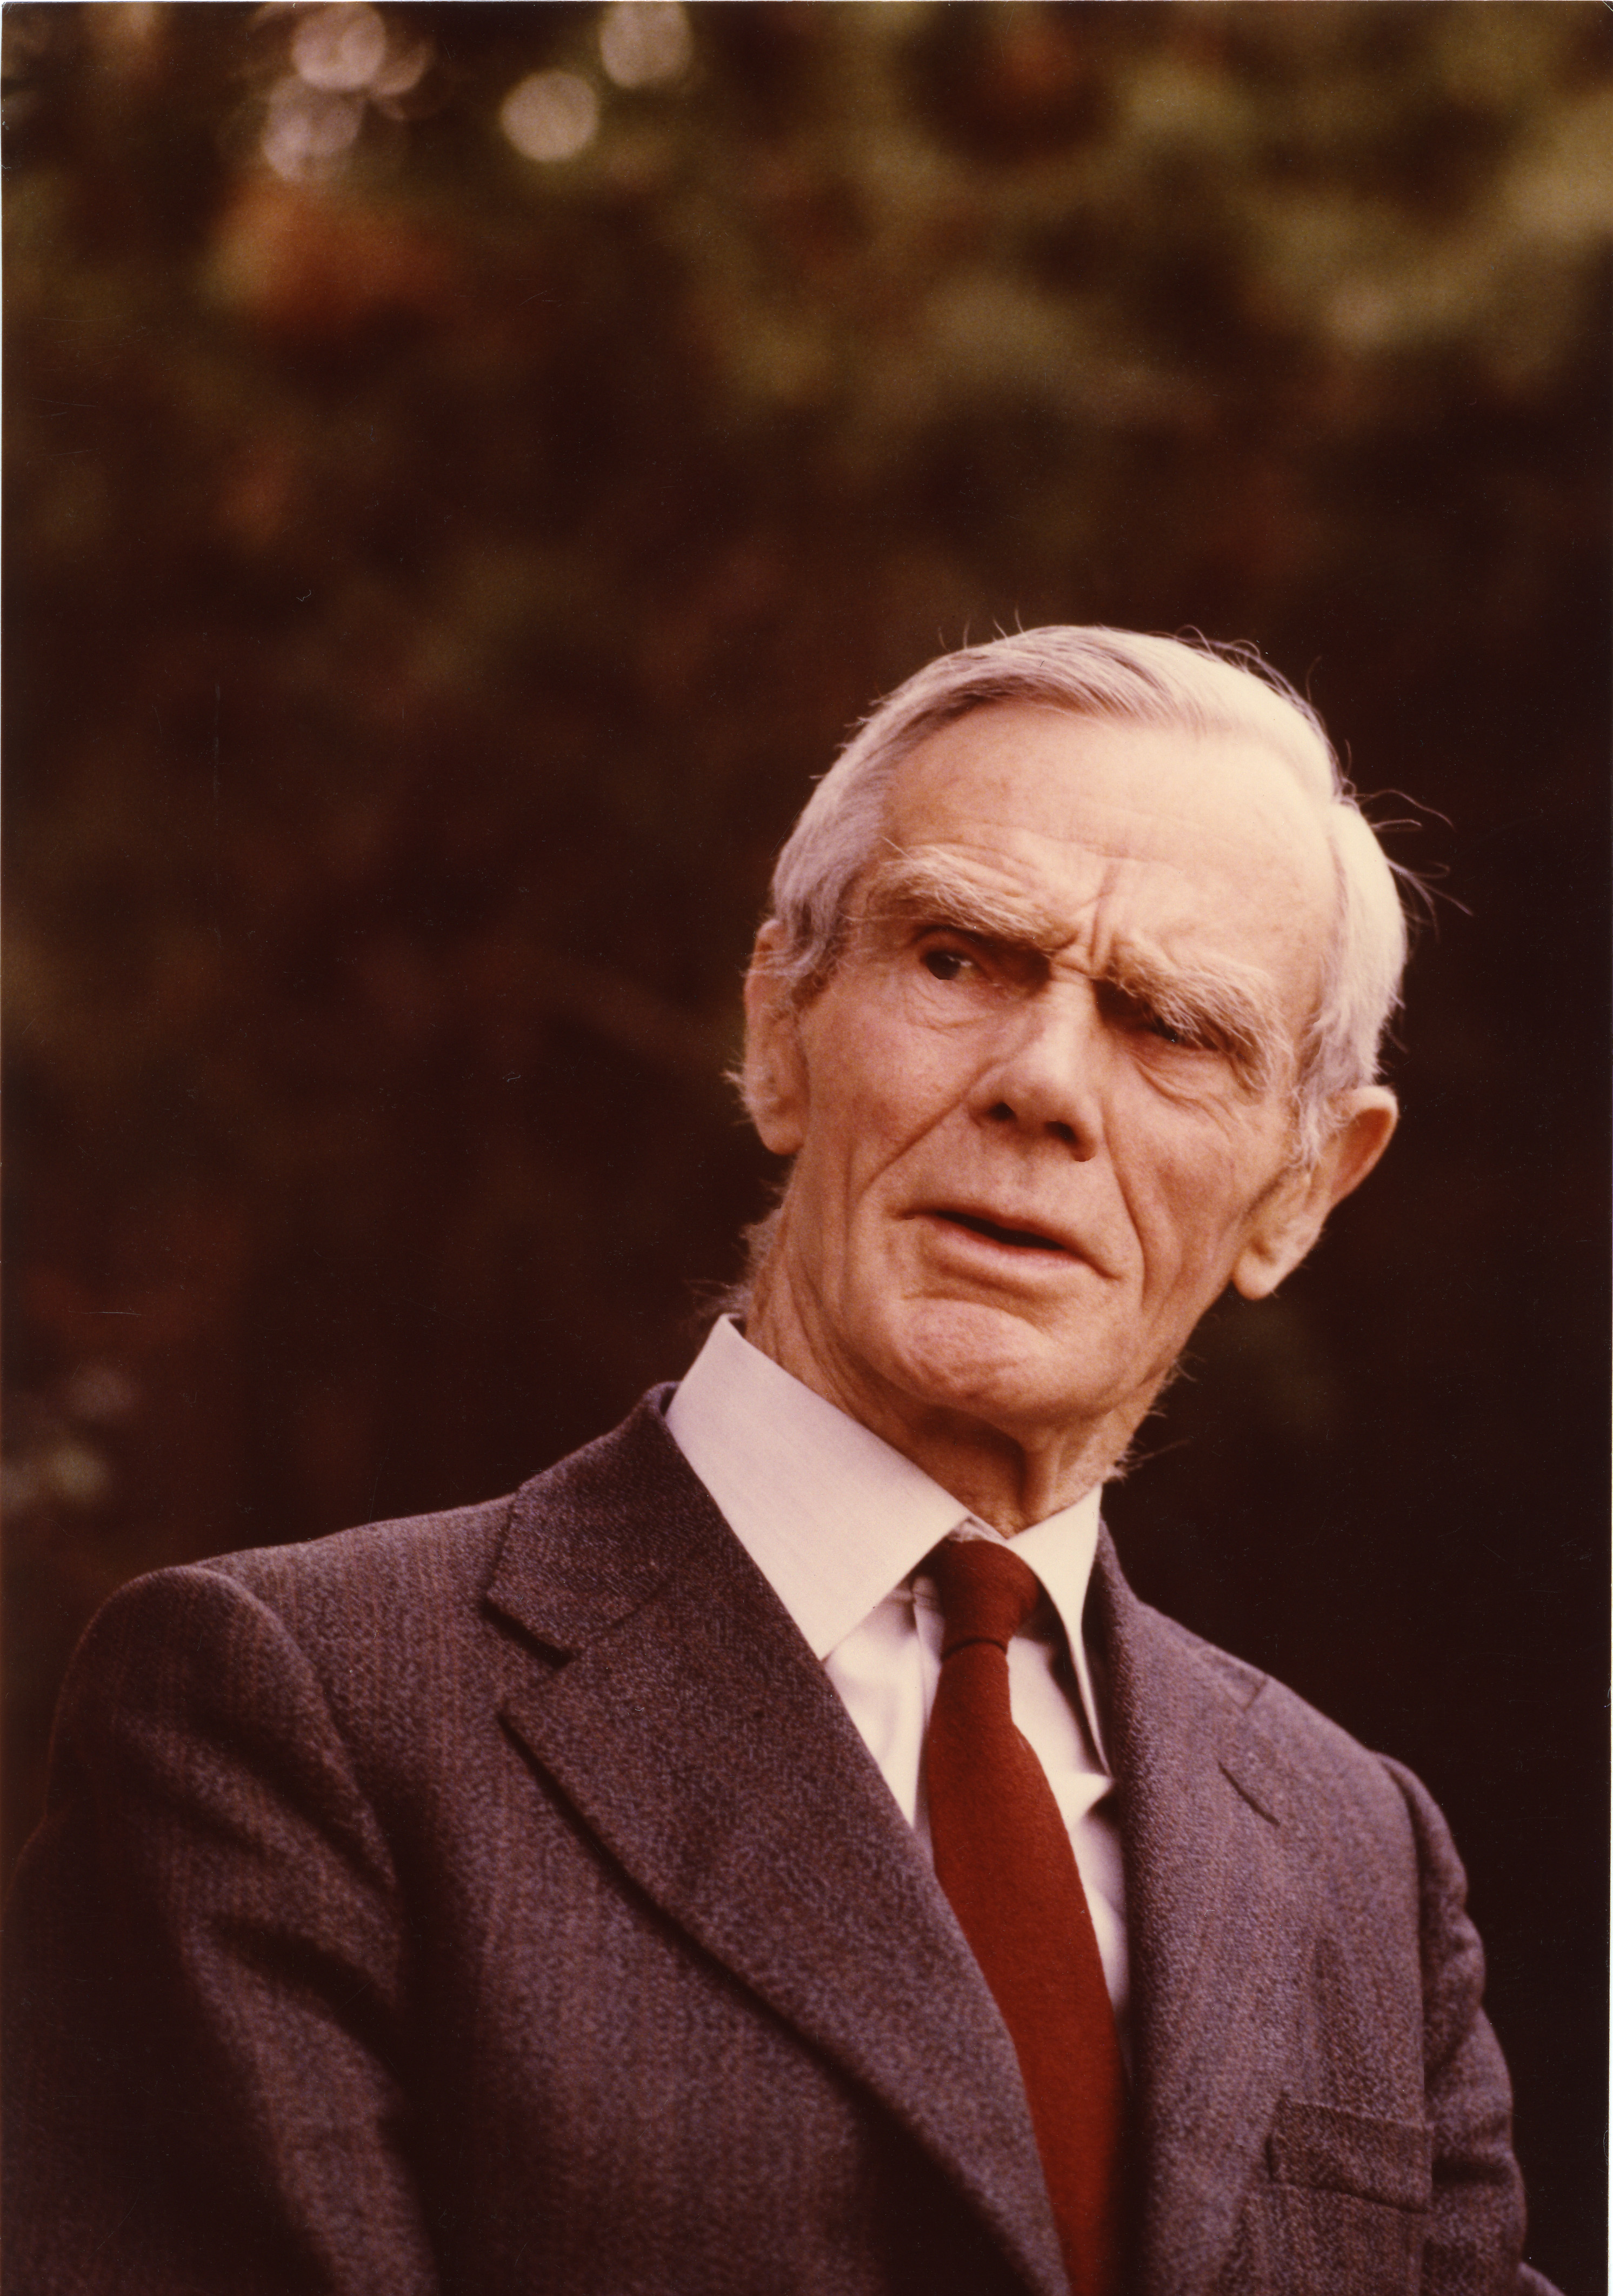 Owen Barfield, c.1985 courtesy of the Marion E. Wade Center